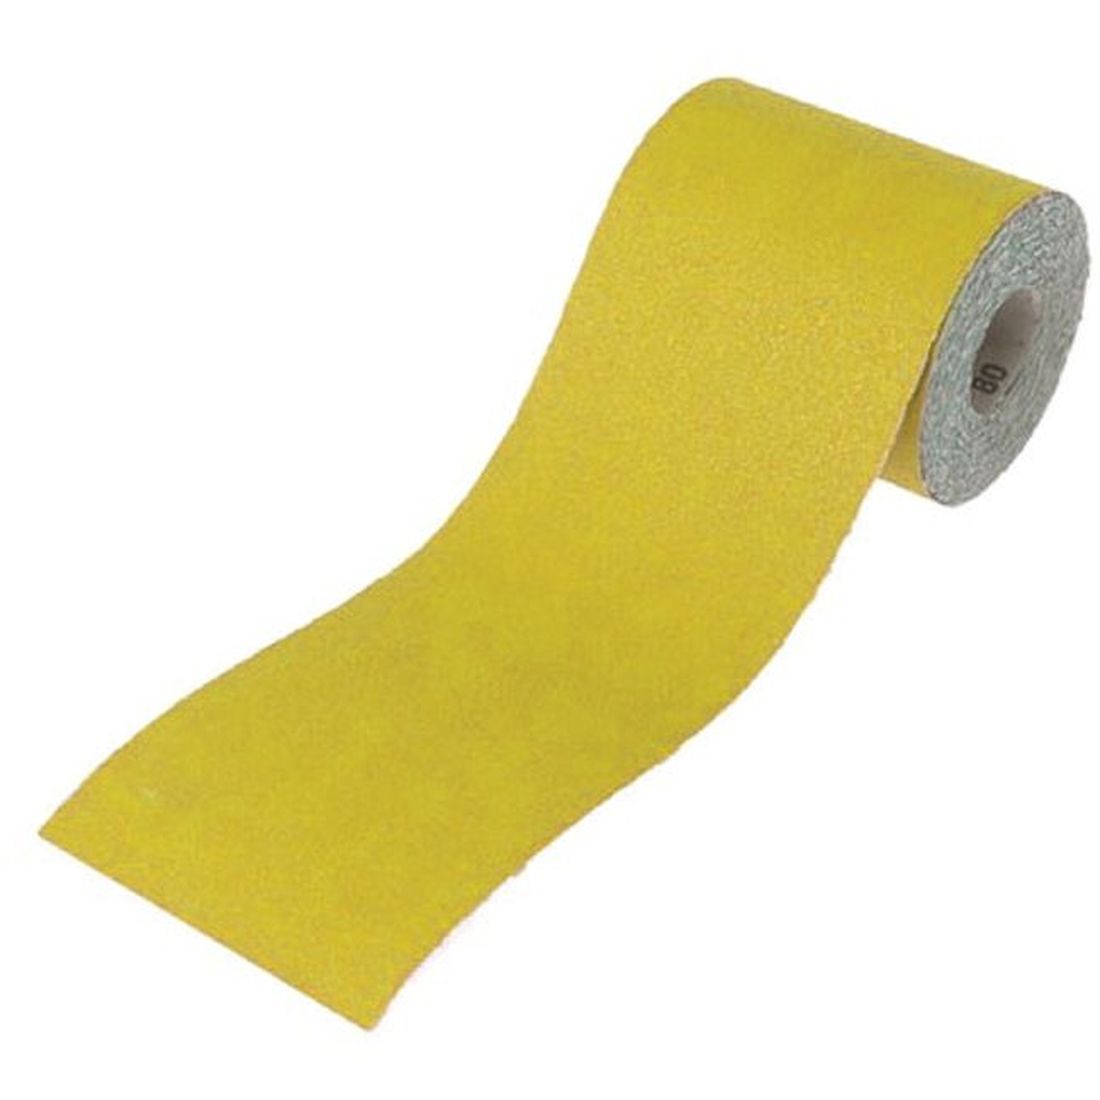 Faithfull Aluminium Oxide Sanding Paper Roll Yellow 115mm x 50m 40G                       